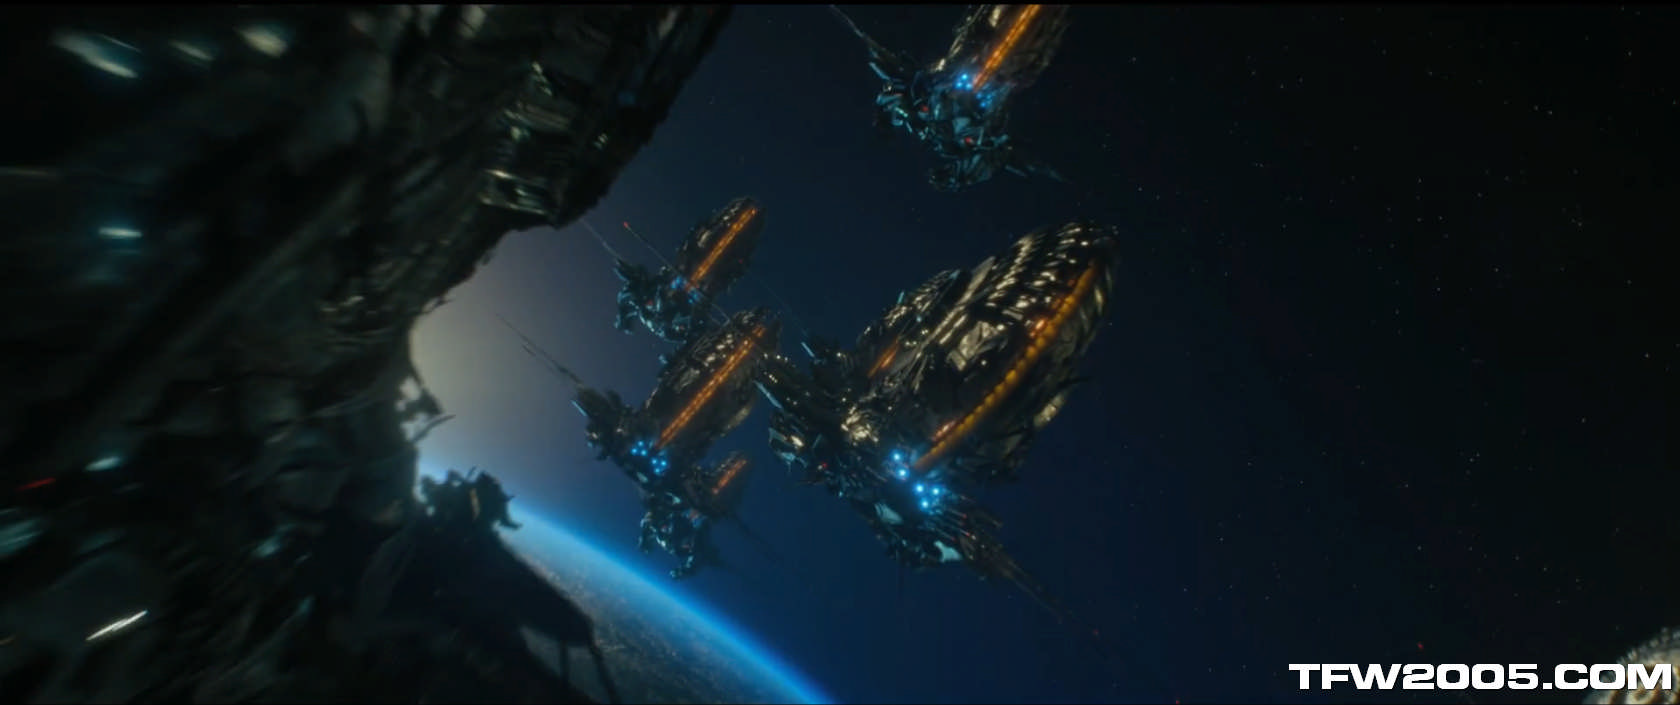 Transformers Image Decepticon Armada HD Wallpaper And Background